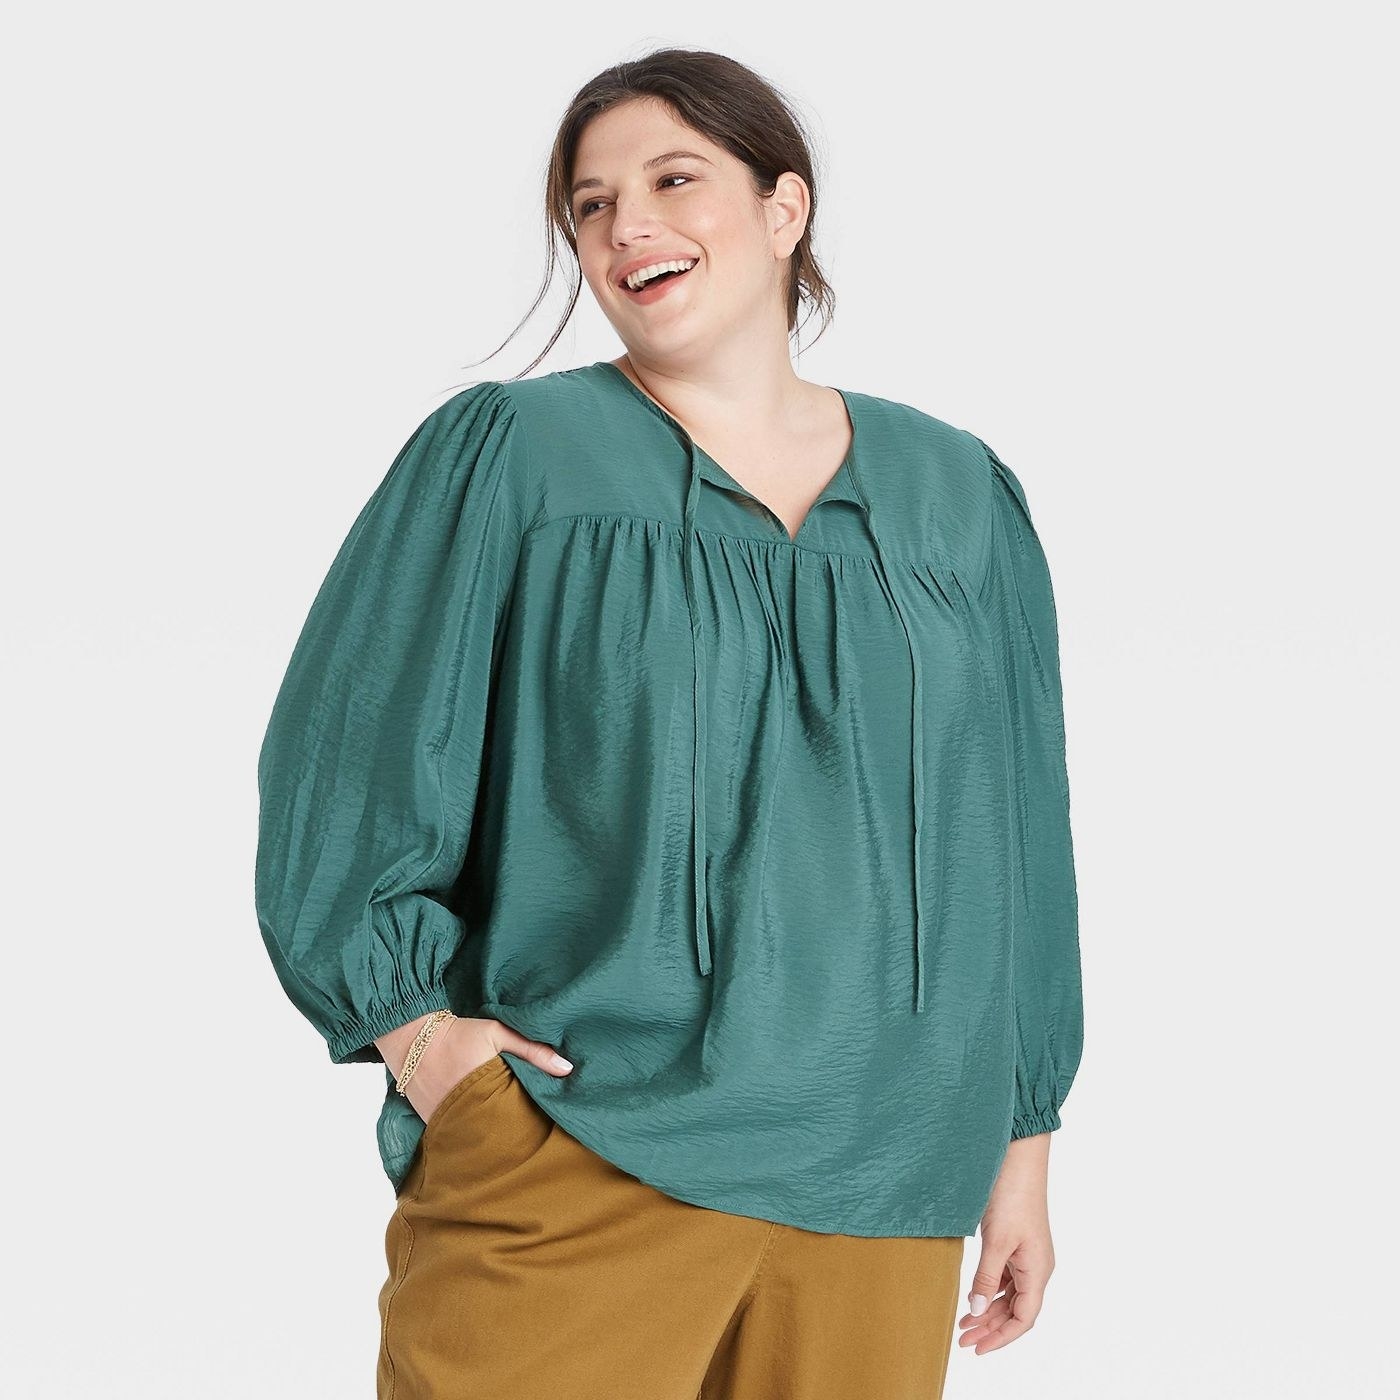 Model wearing the green balloon long-sleeve blouse